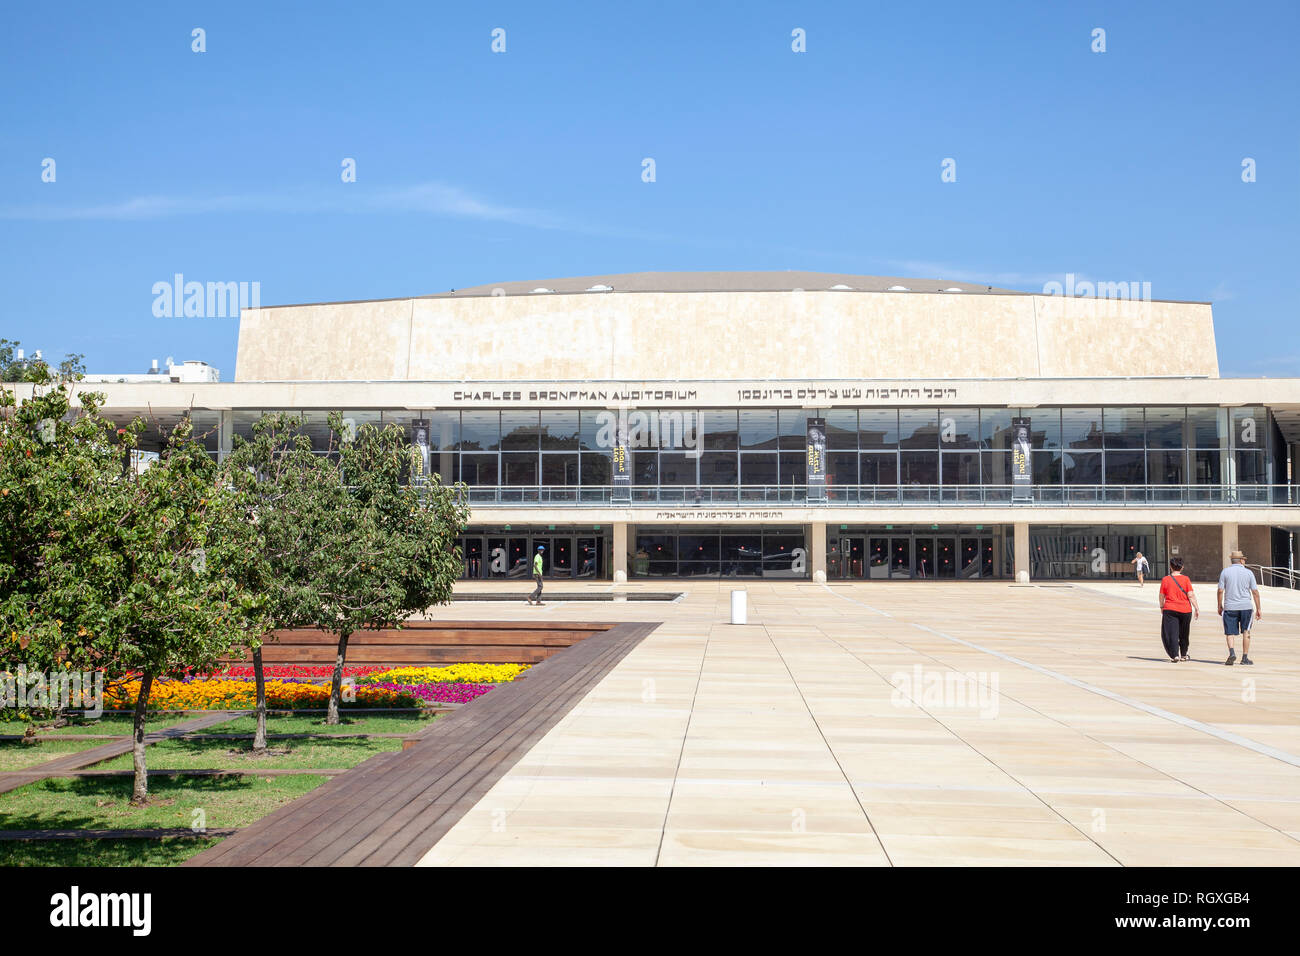 Charles Bronfman Auditorium in Tel Aviv, Israel Stock Photo